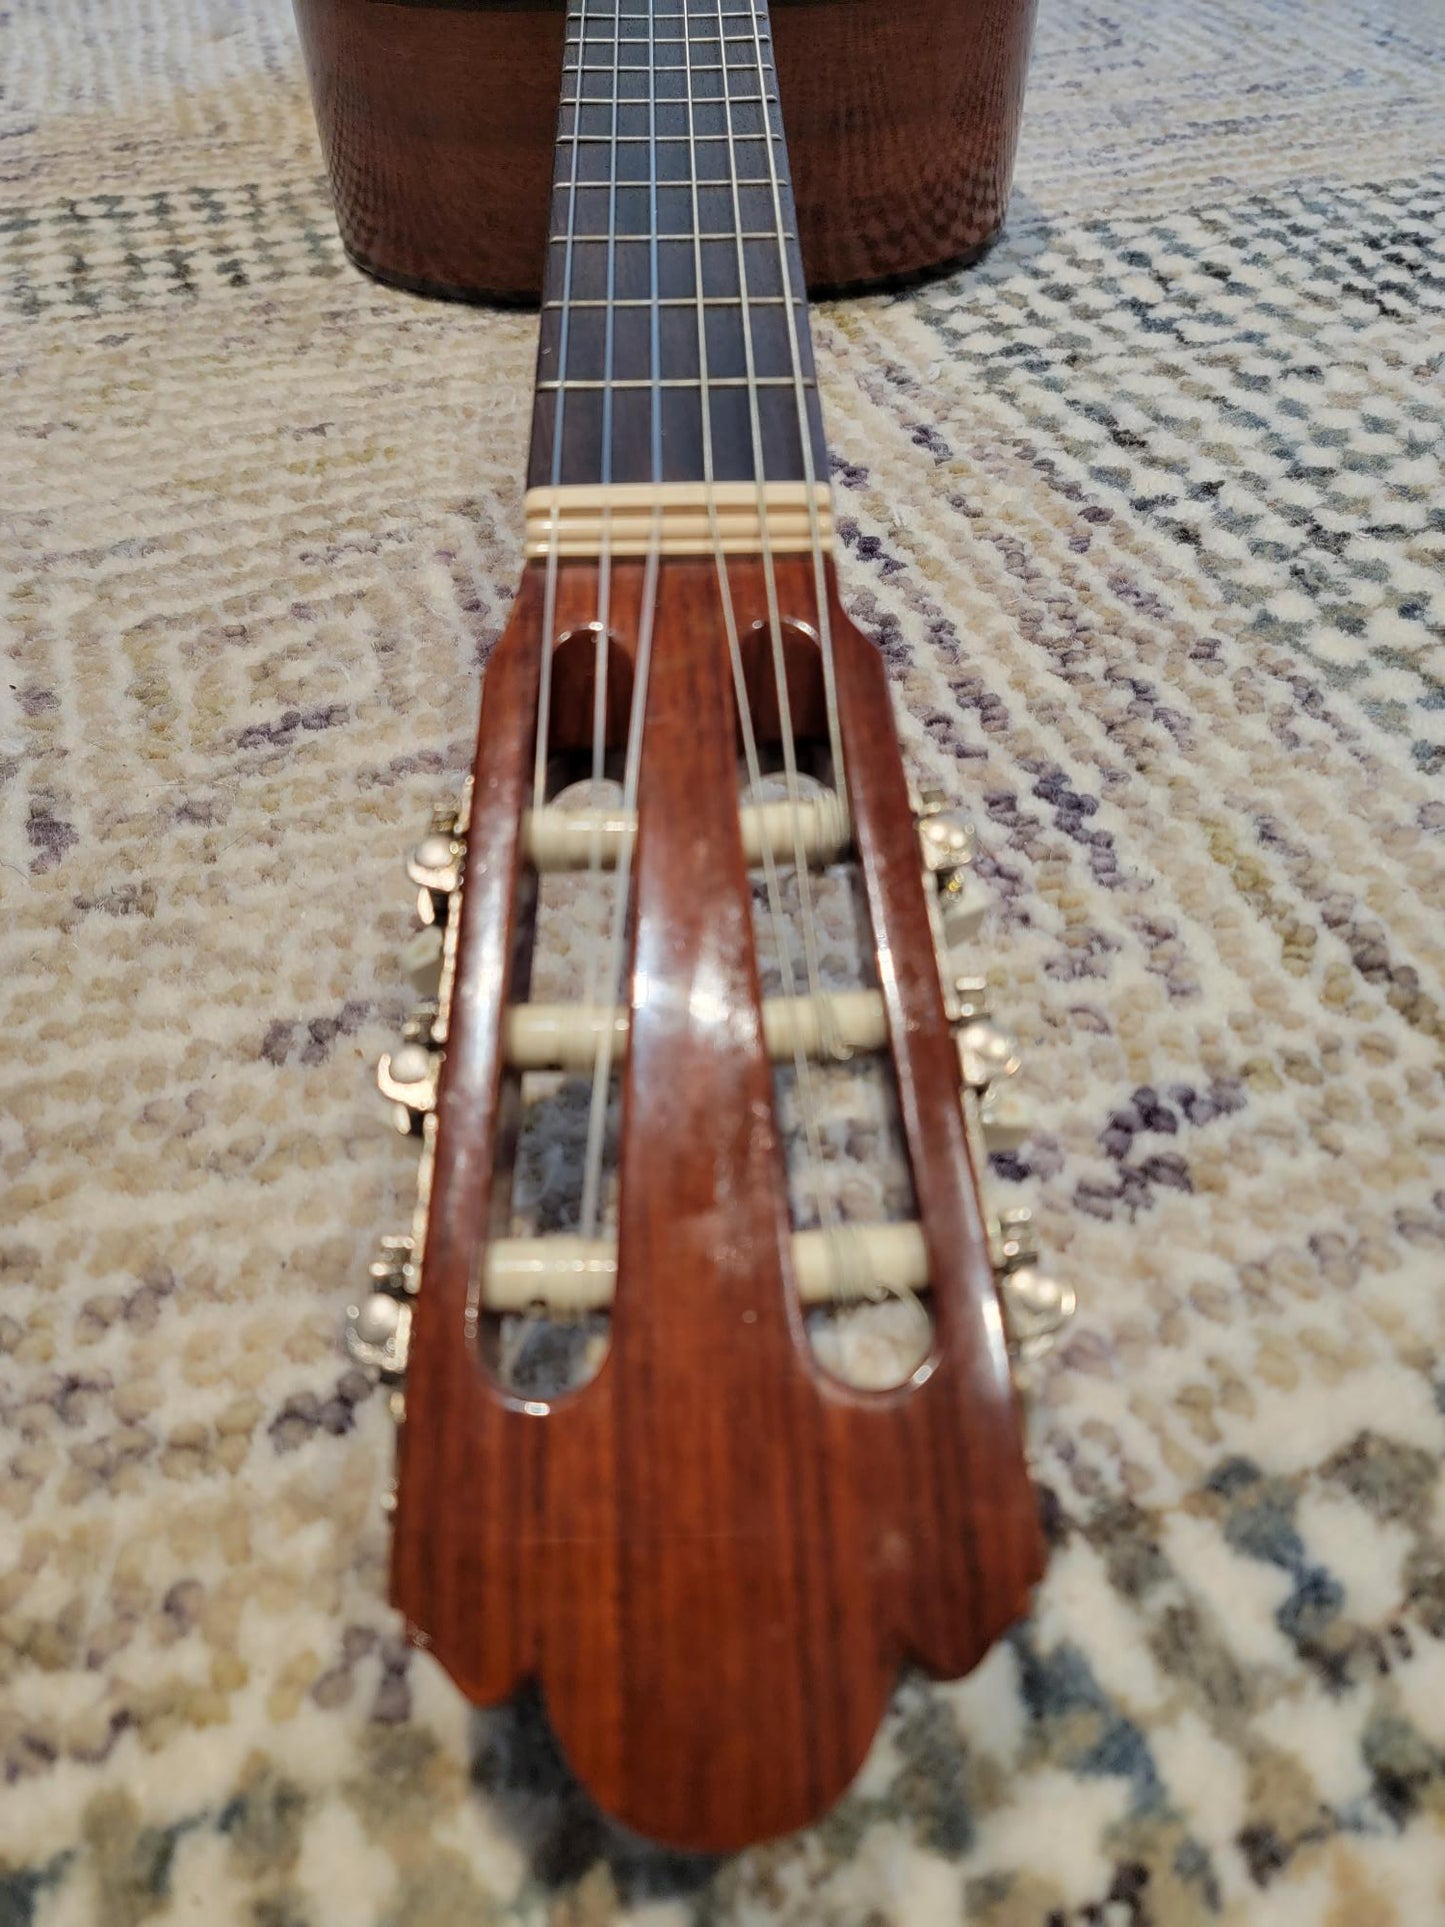 Yasuo Abe Gut Guitar 520 by Zenon